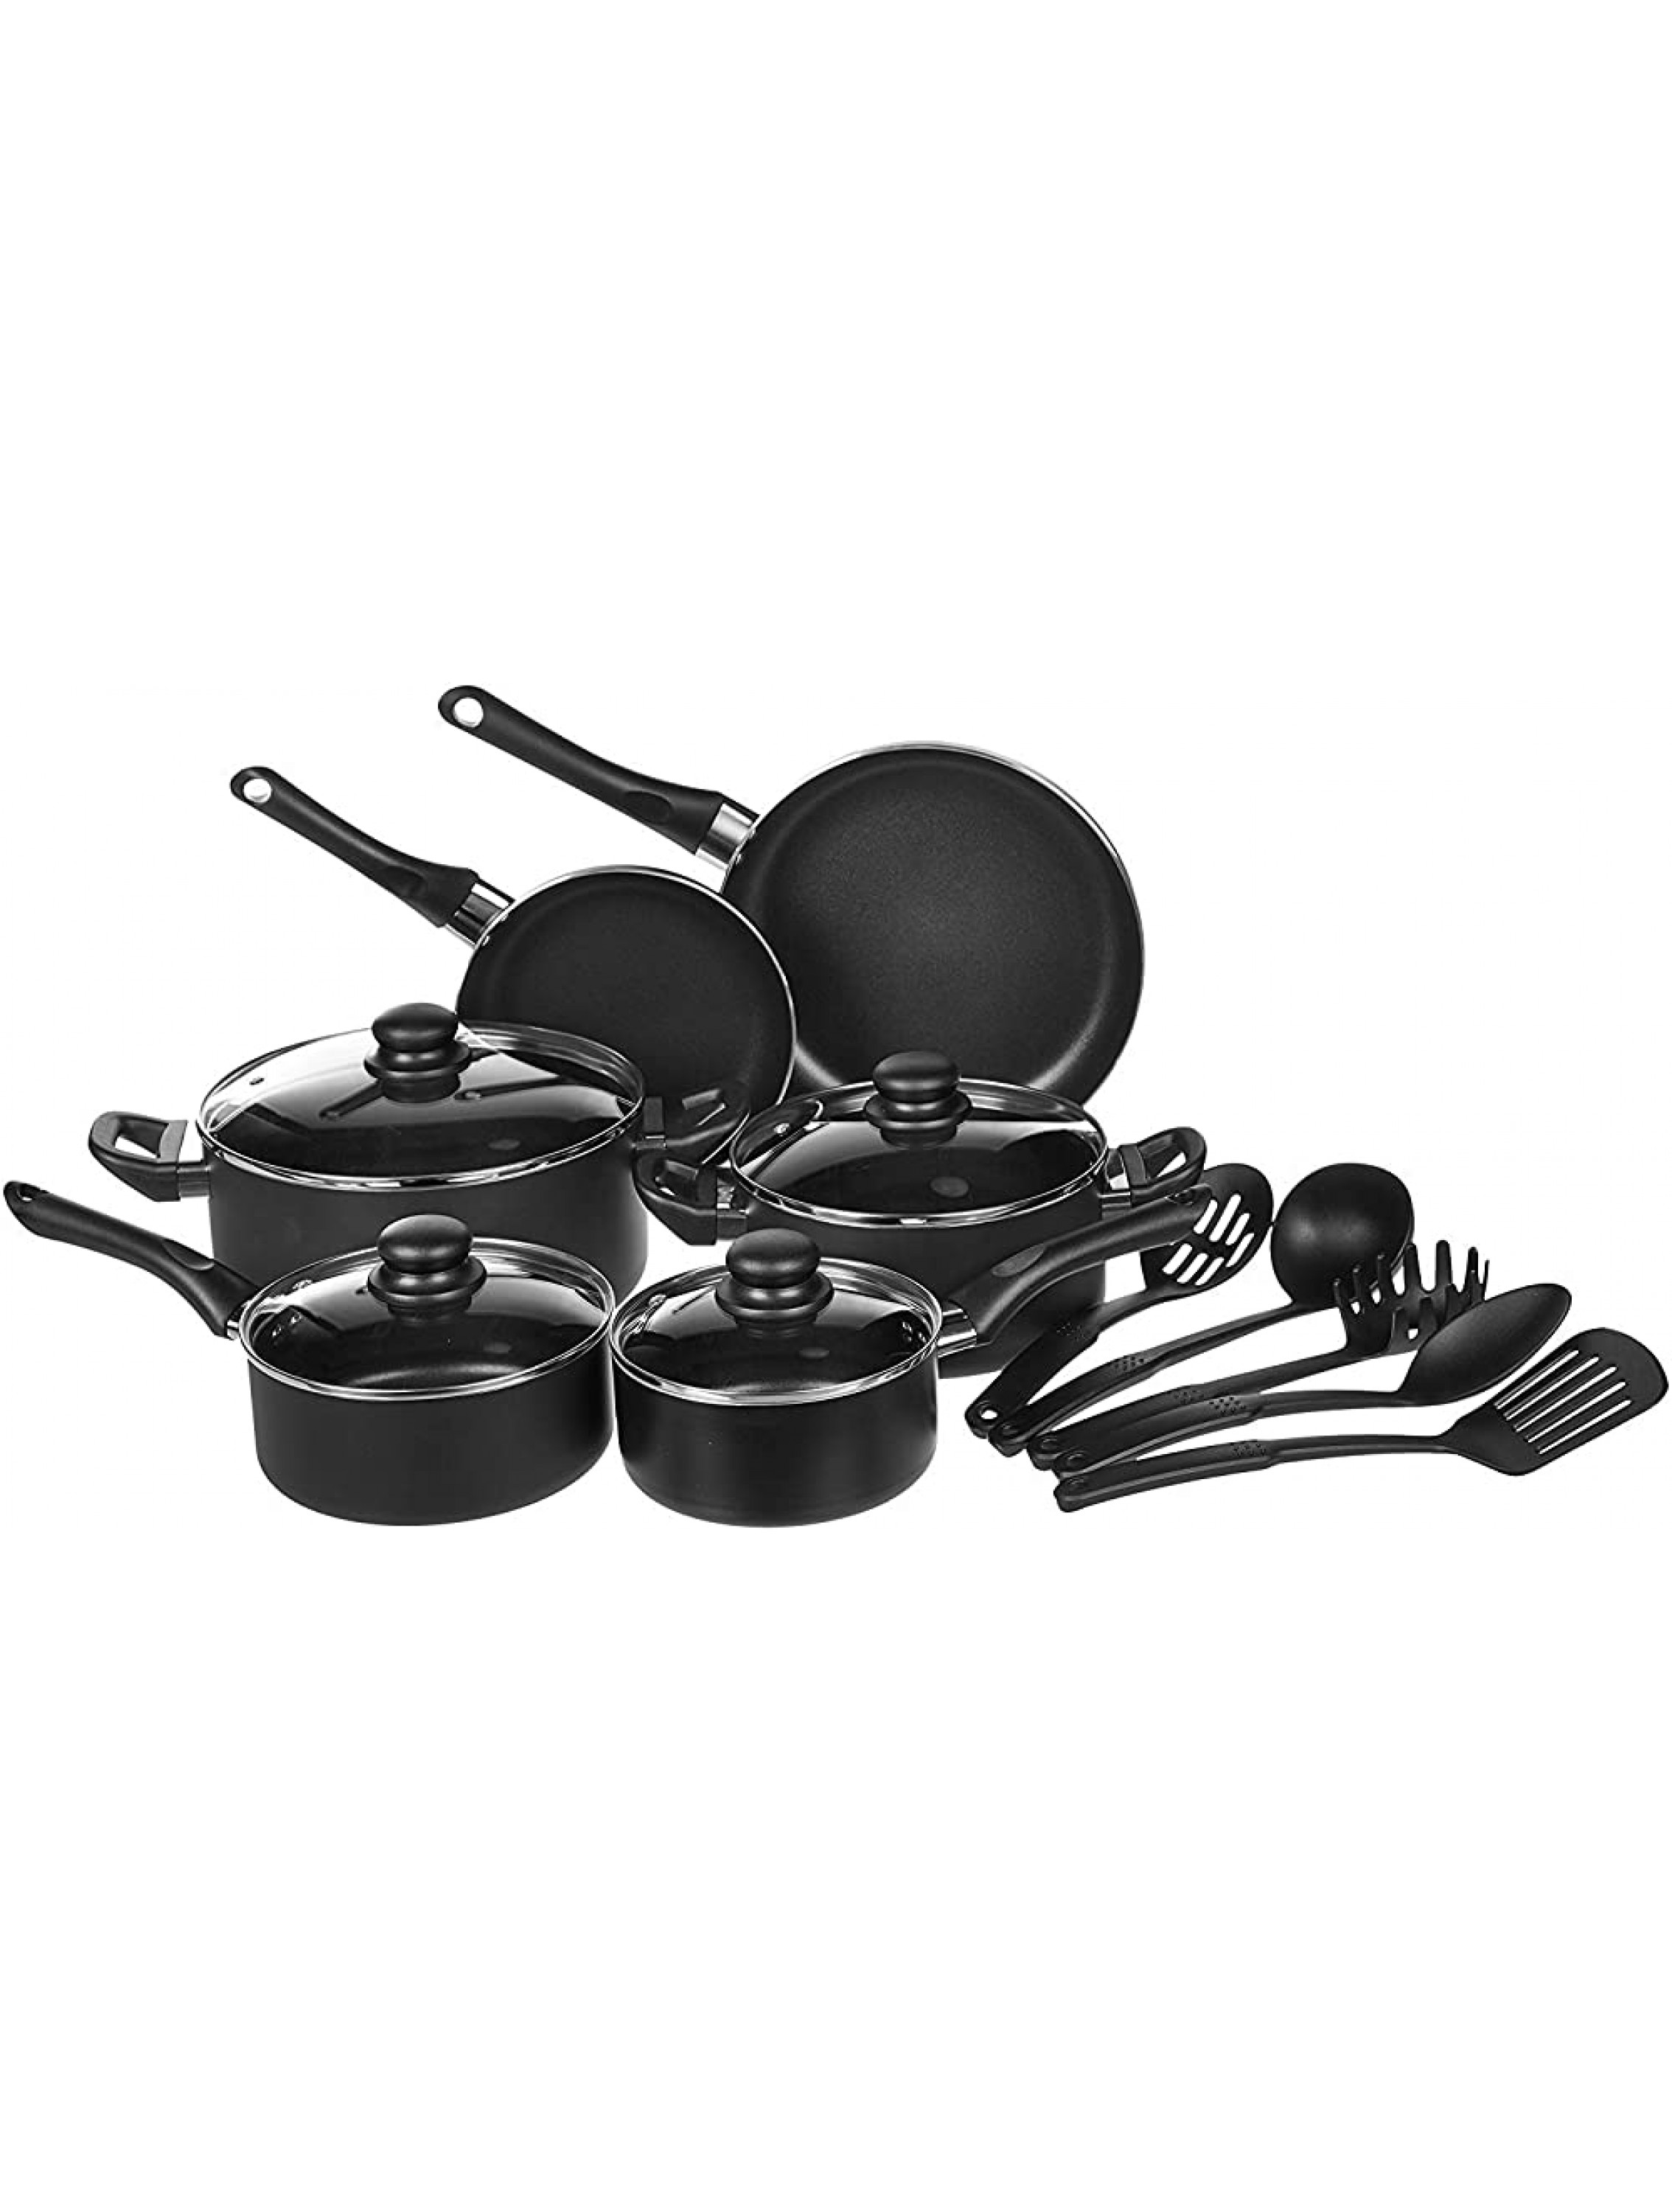 Basics Non-Stick Cookware Set Pots Pans and Utensils 15-Piece Set - BFPMRKP71